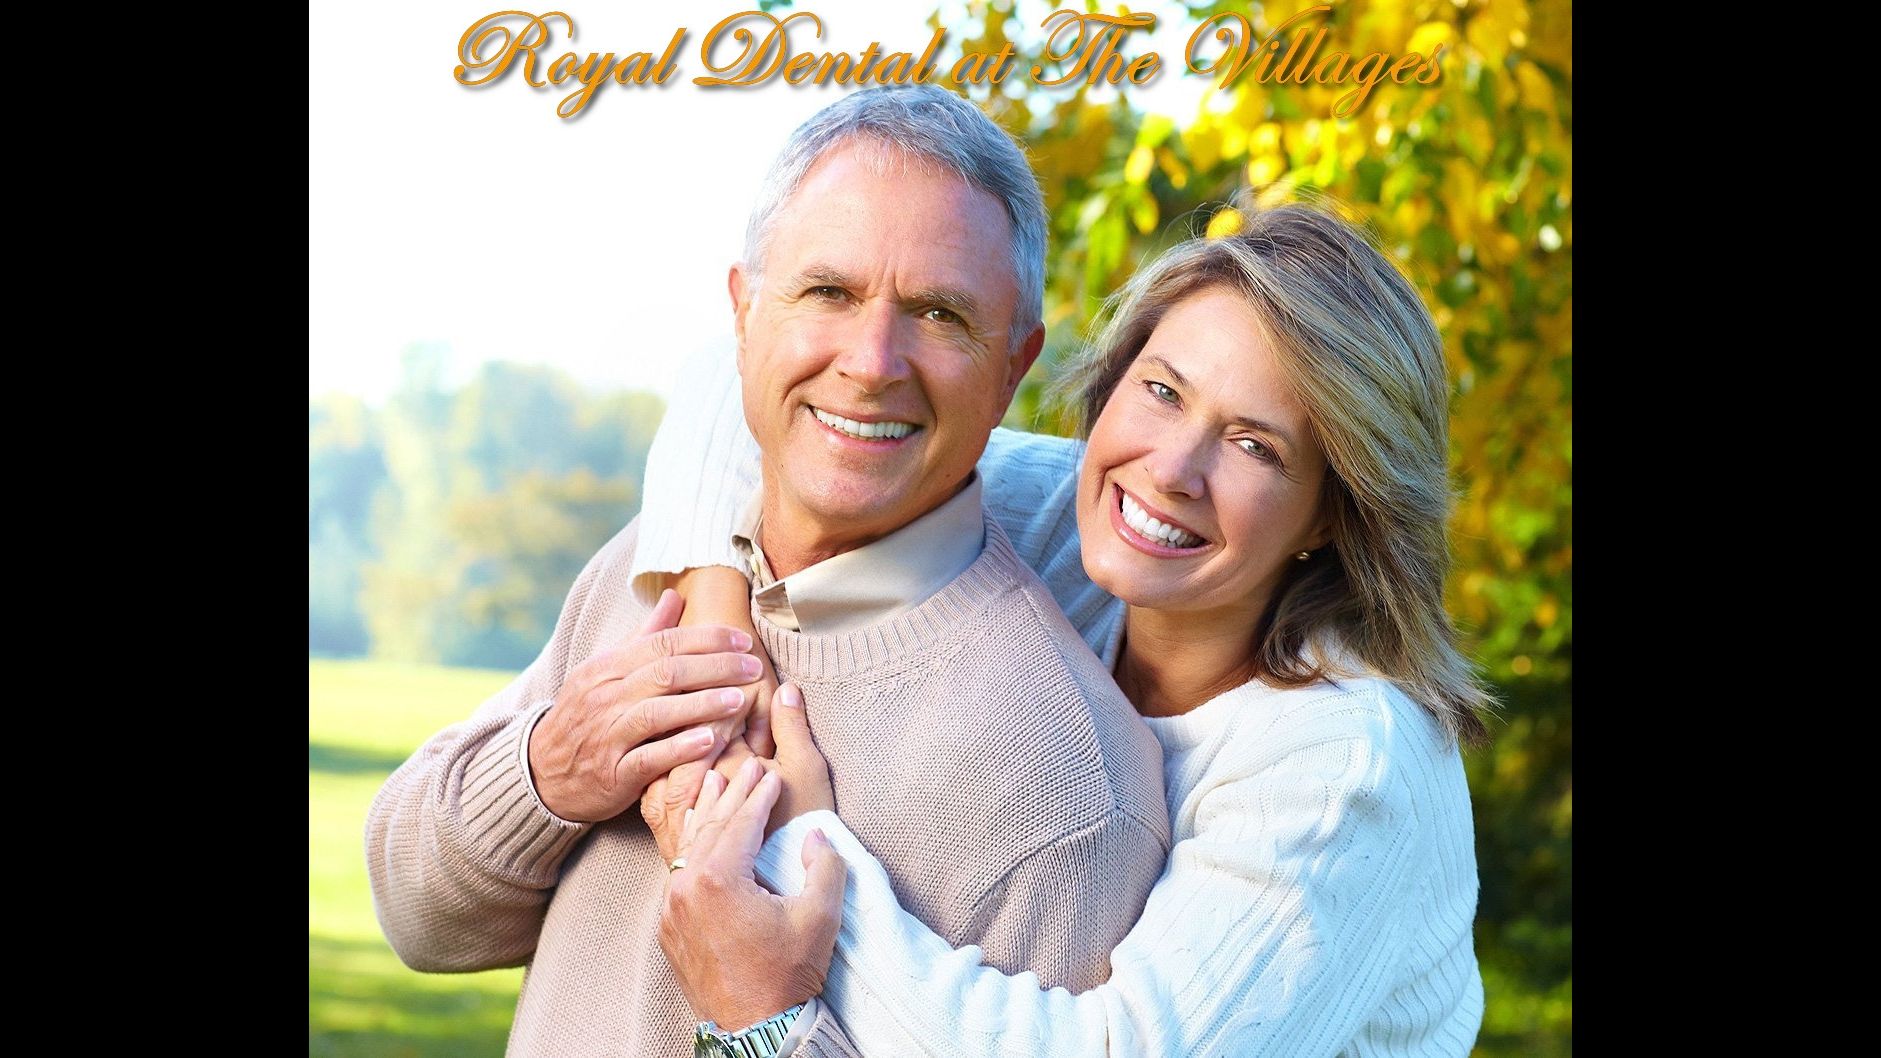 Royal Dental at The Villages, LLC